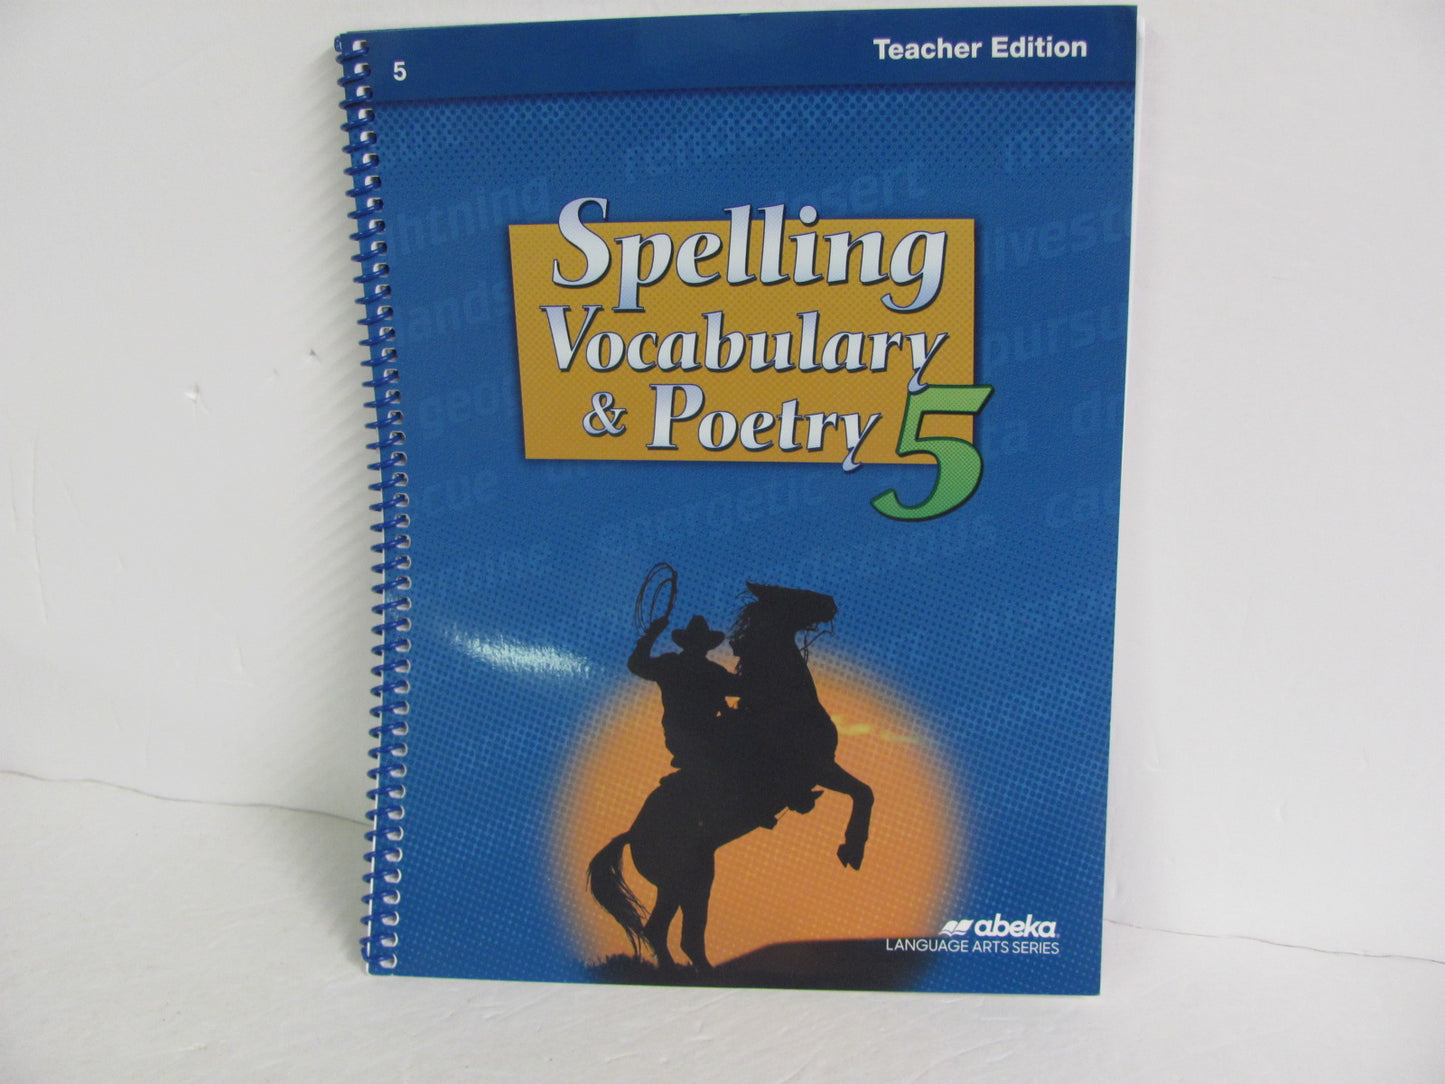 Spelling Vocabulary & Poetry Abeka 5th Grade Spelling/Vocabulary Books